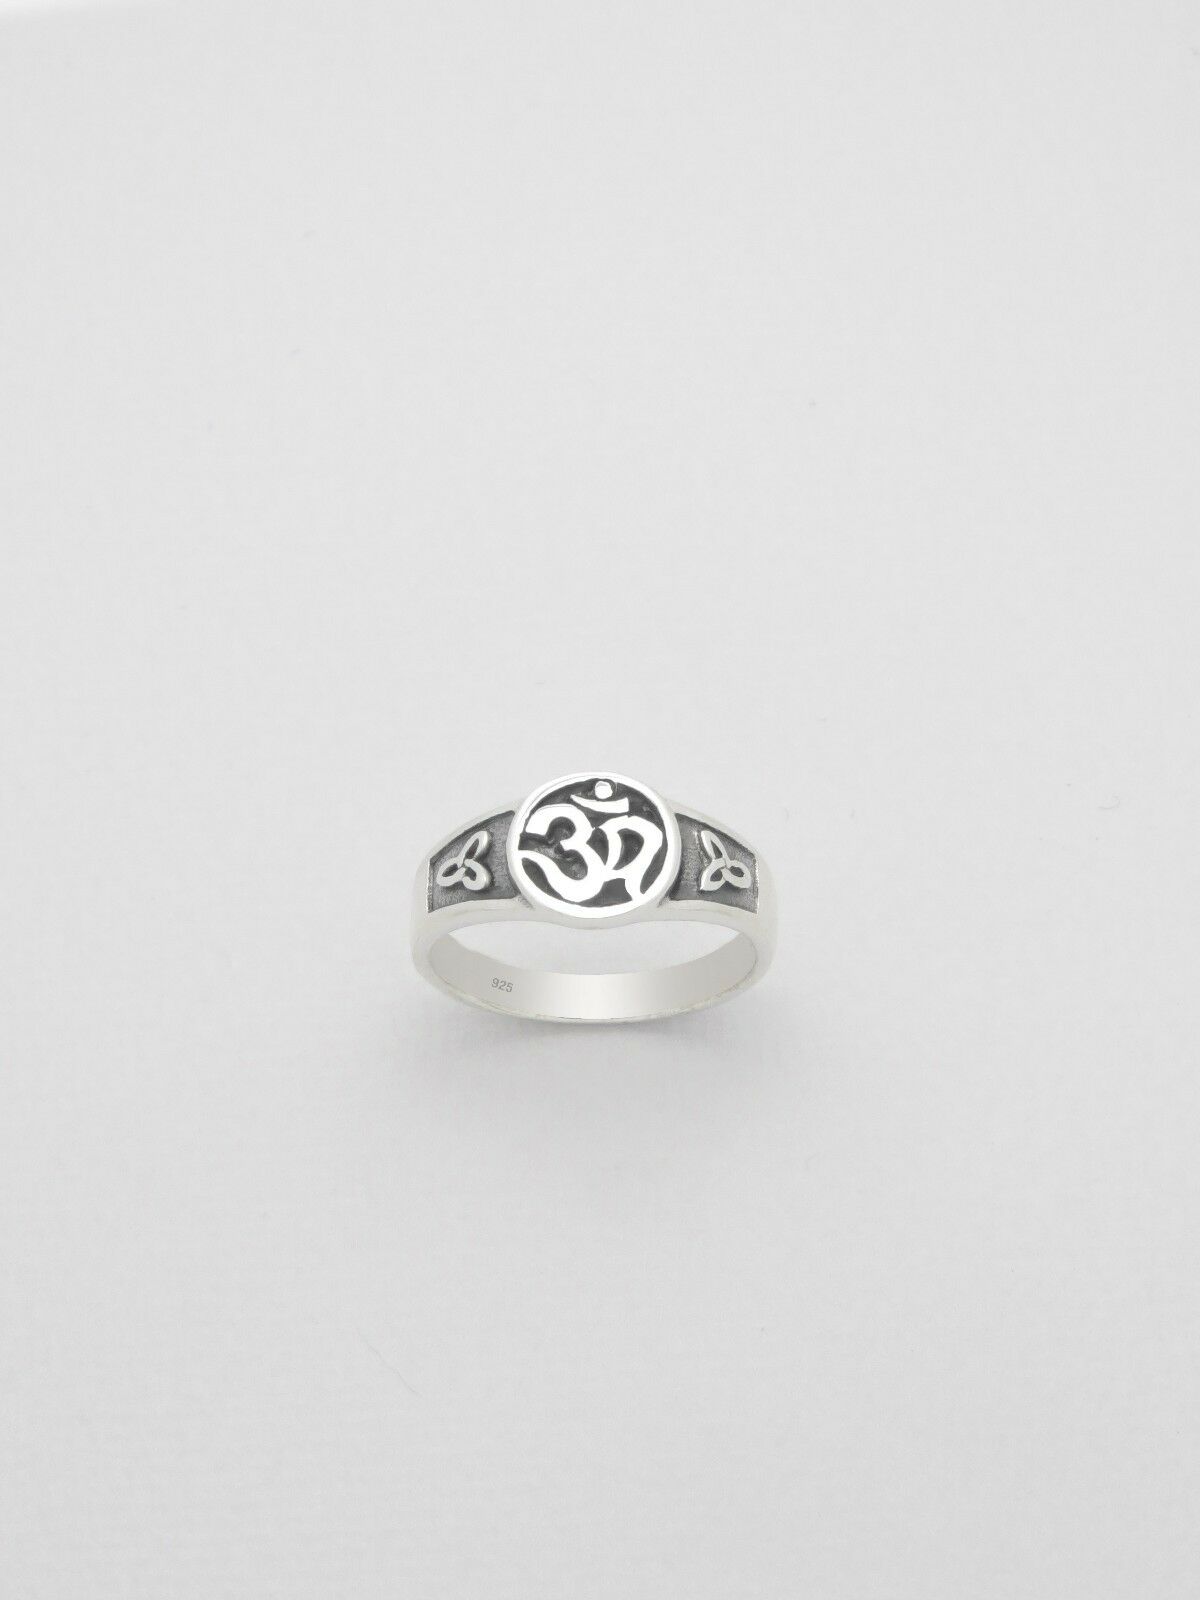 Sterling Silver .925 Hindu Om Ohm Aum Triquerta Fashion Ring Sizes 6-9 - Matties Modern Jewelry